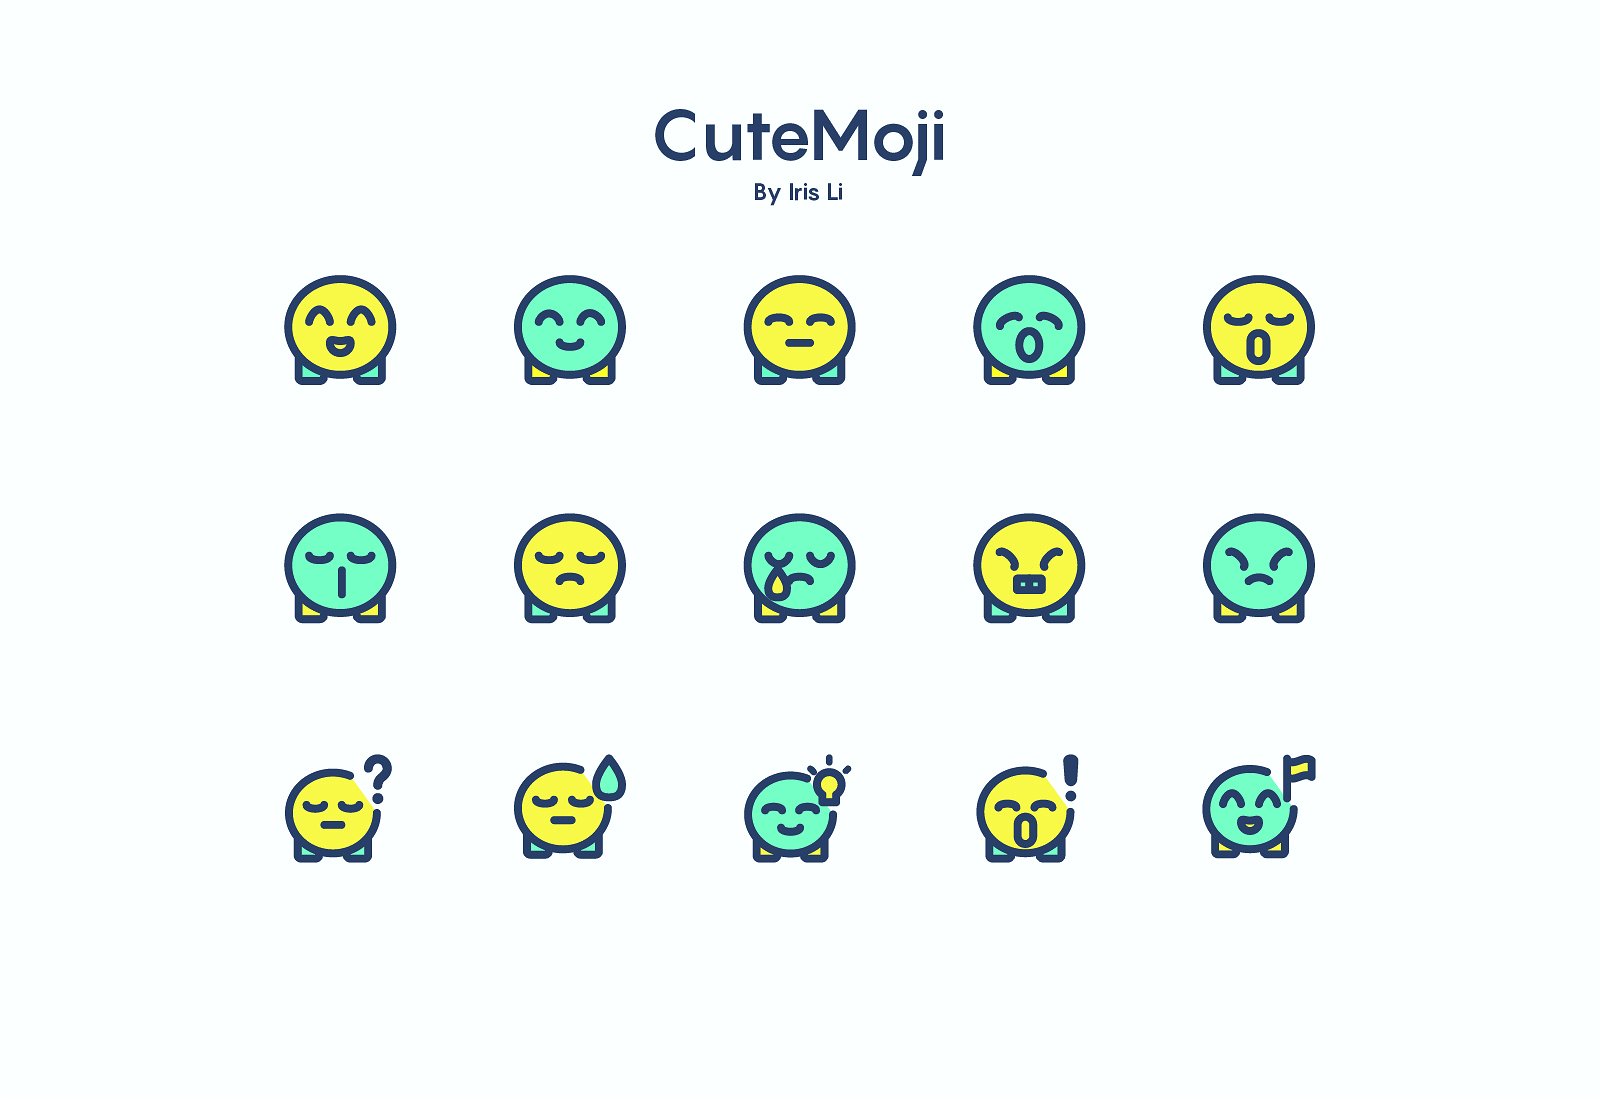 A cutemoji emoticon set